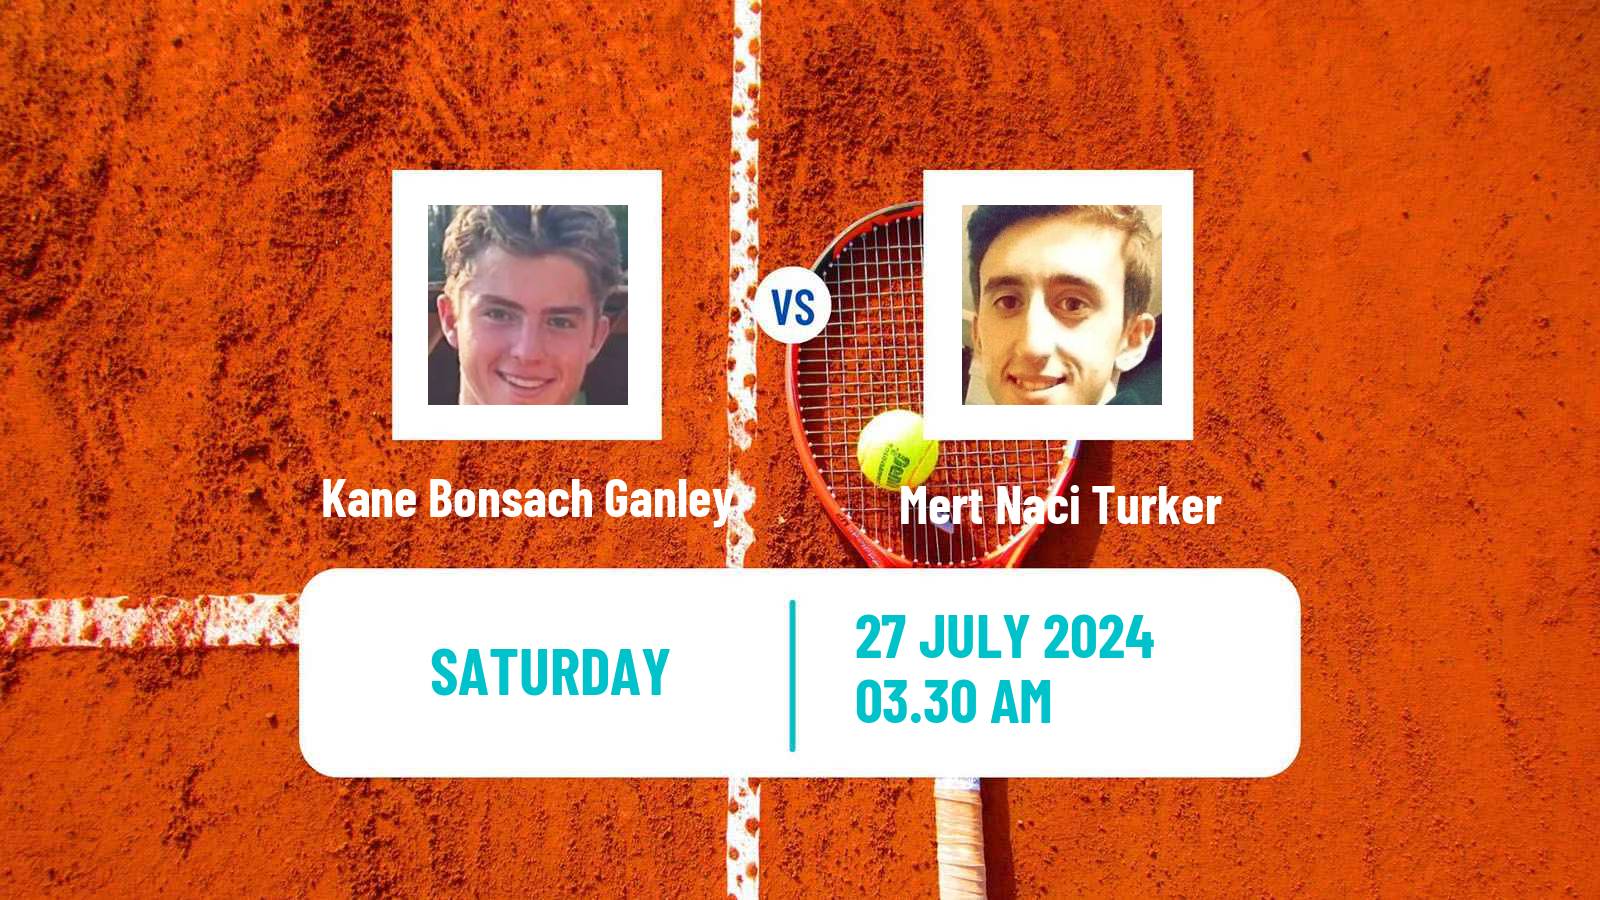 Tennis ITF M15 Kursumlijska Banja 12 Men Kane Bonsach Ganley - Mert Naci Turker